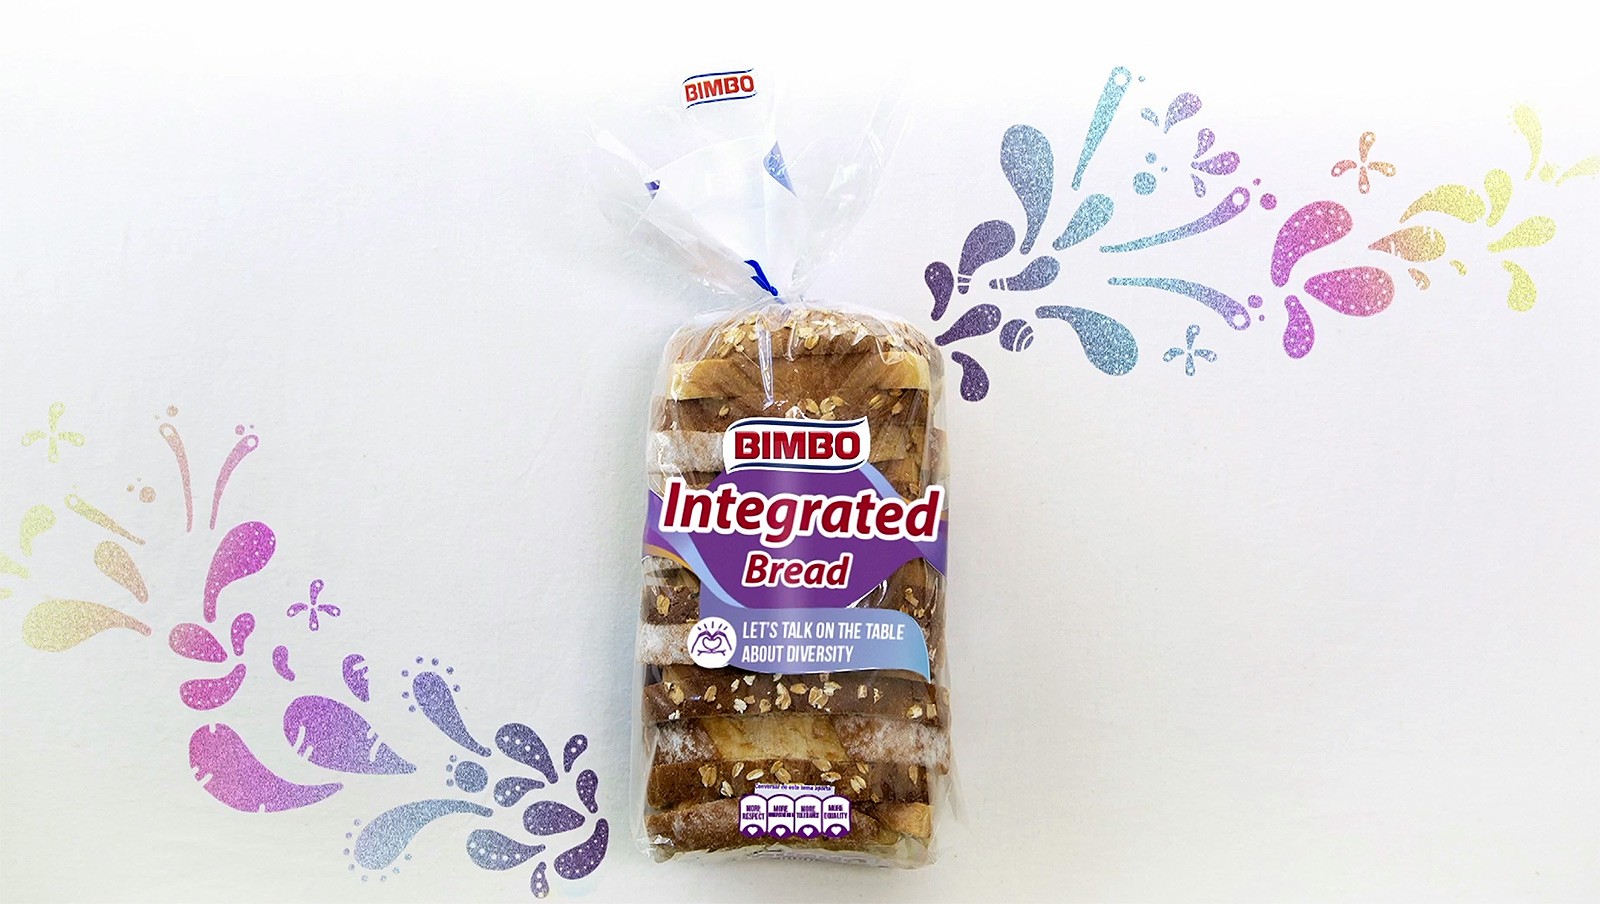 Bimbo Integrated Bread by Ogilvy